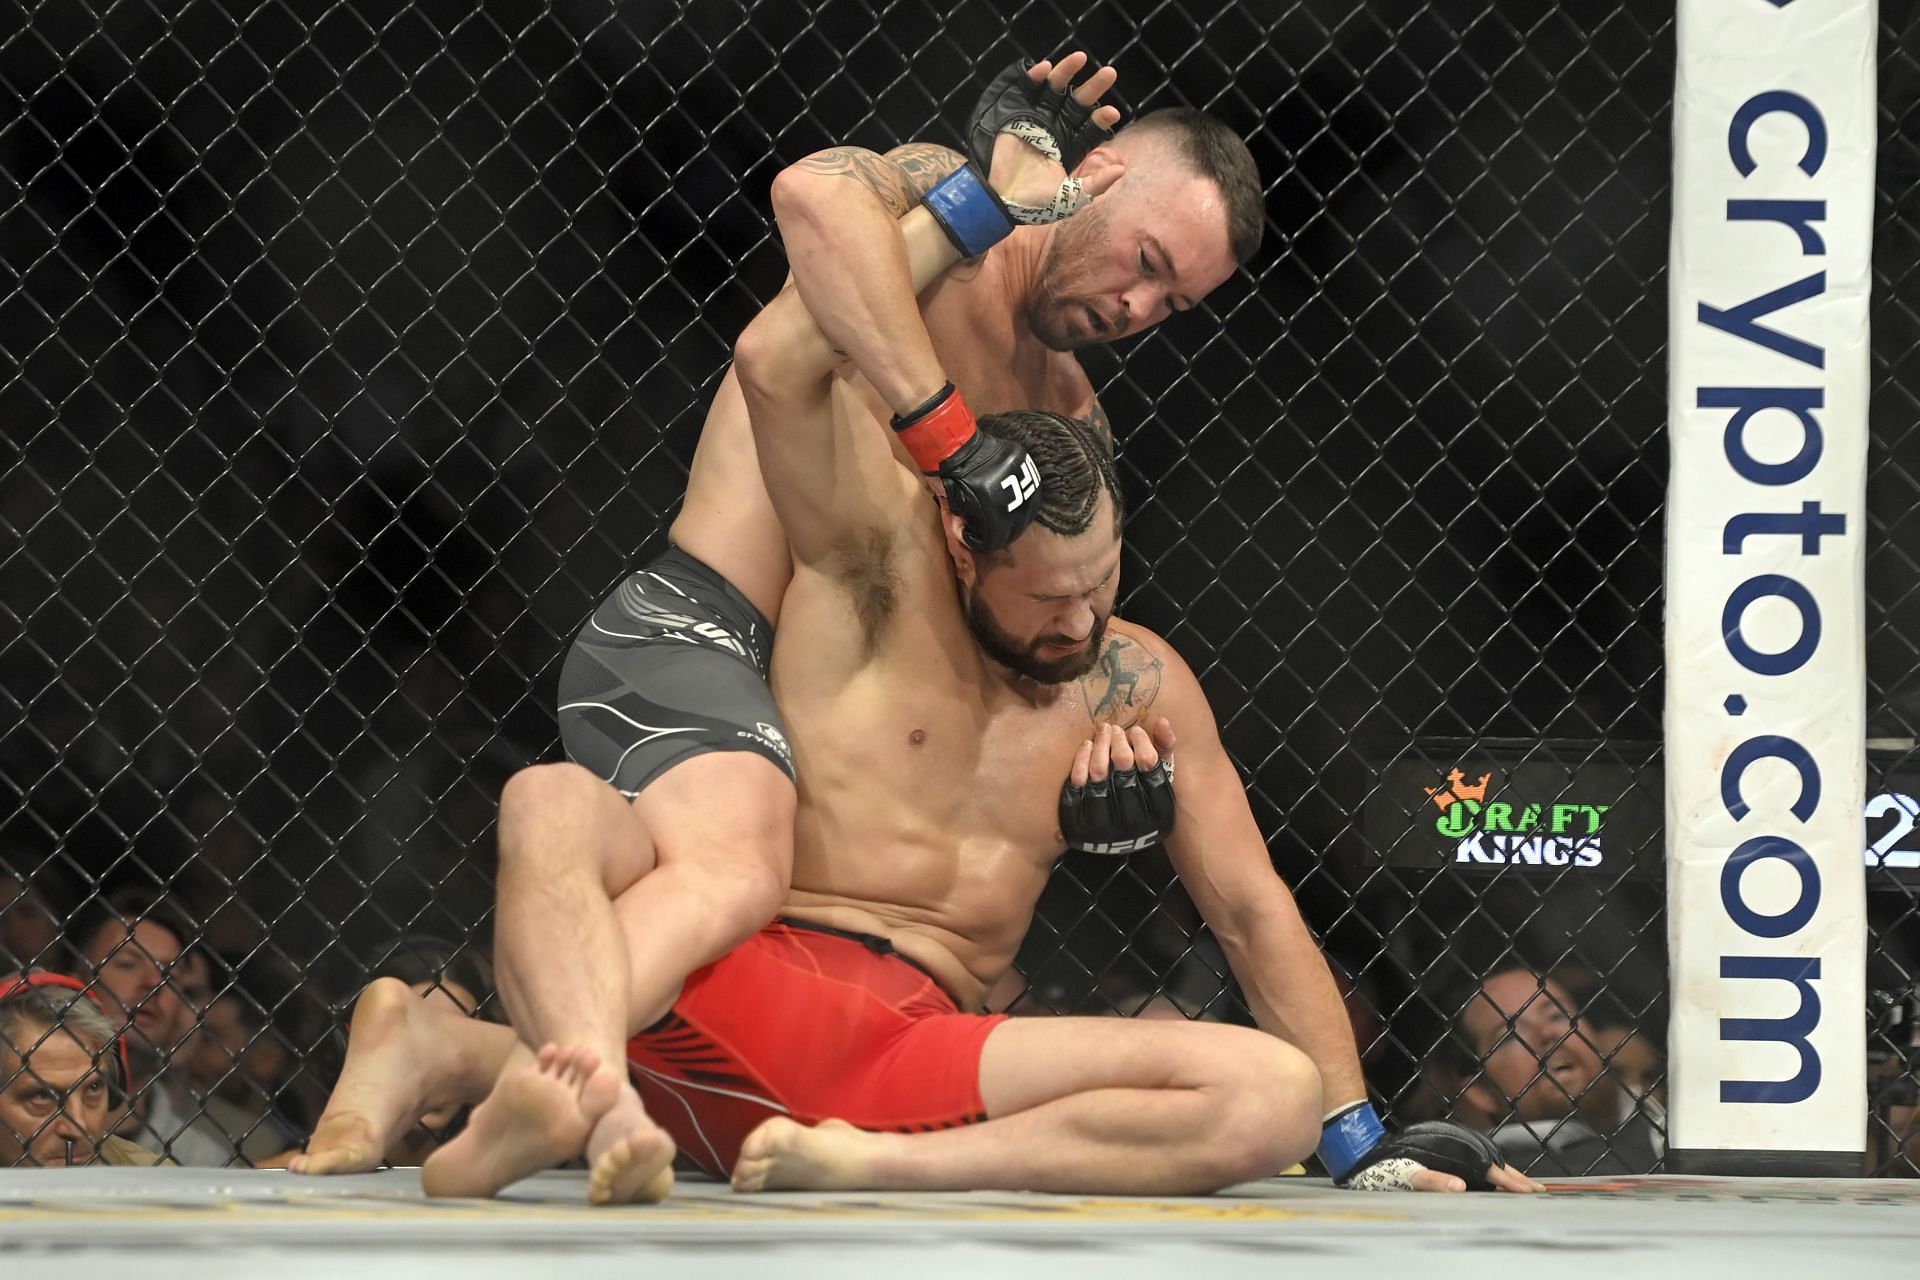 UFC 272: Colby Covington vs. Jorge Masvidal